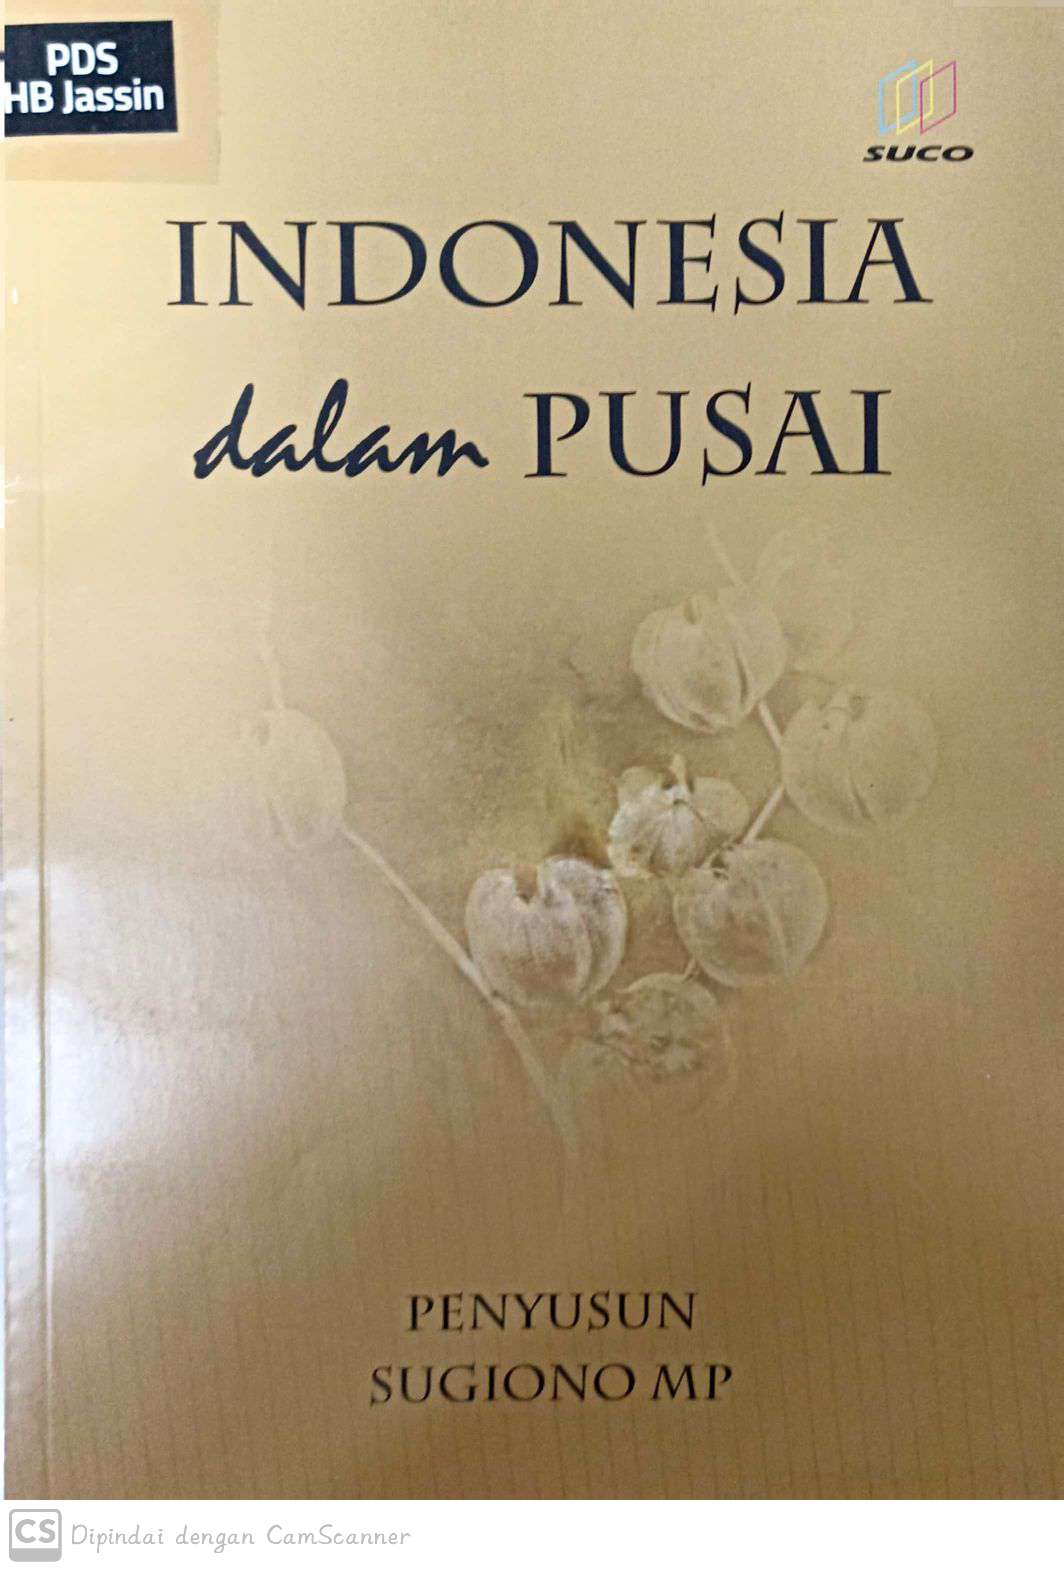 Indonesia dalam pusai